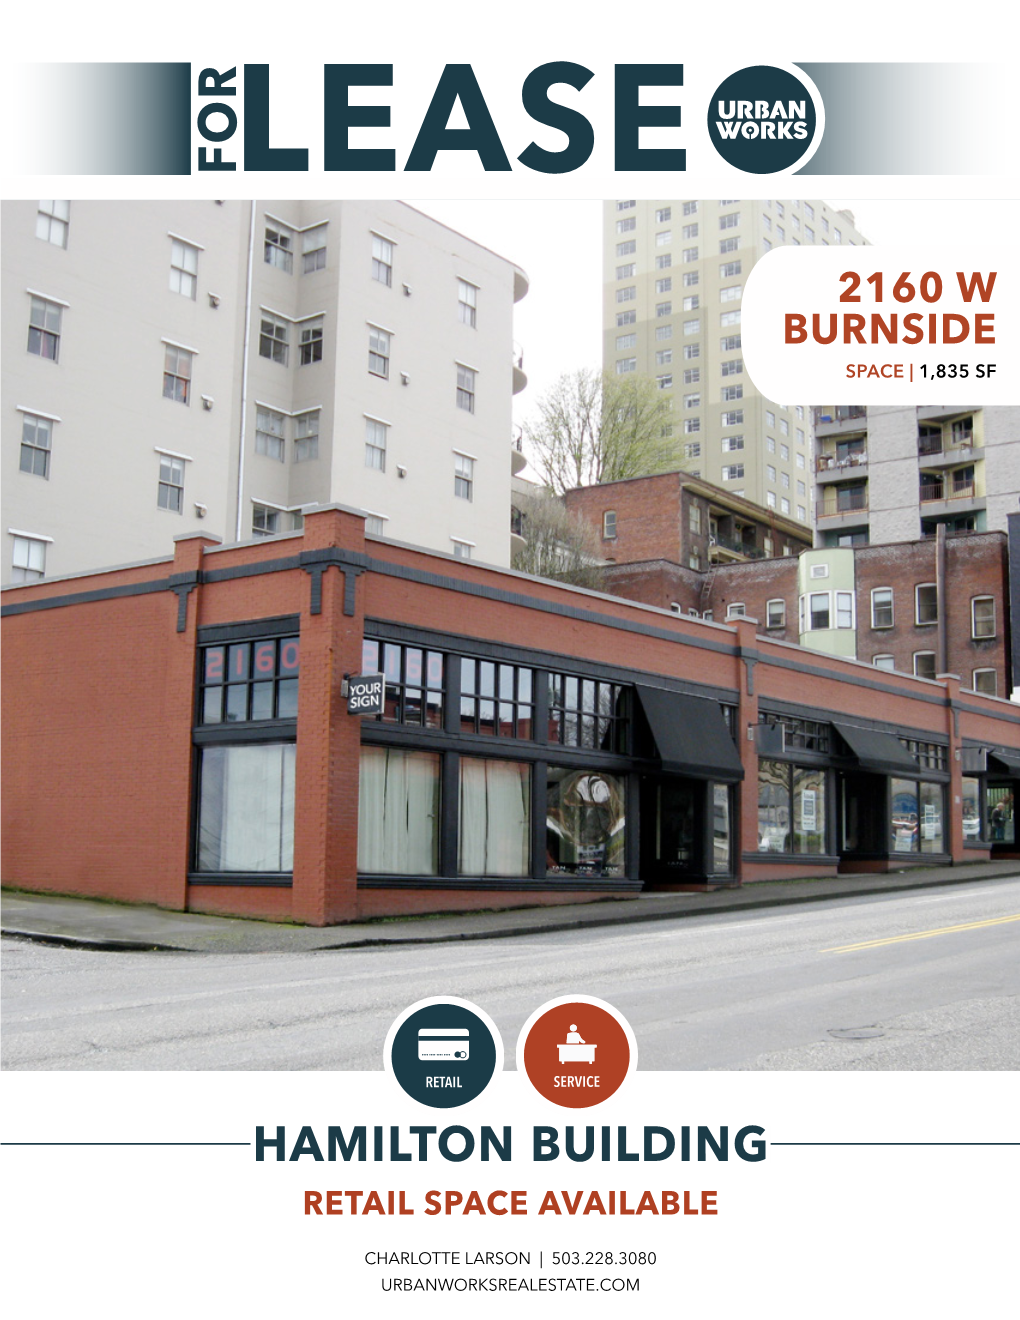 Hamilton Building Retail Space Available